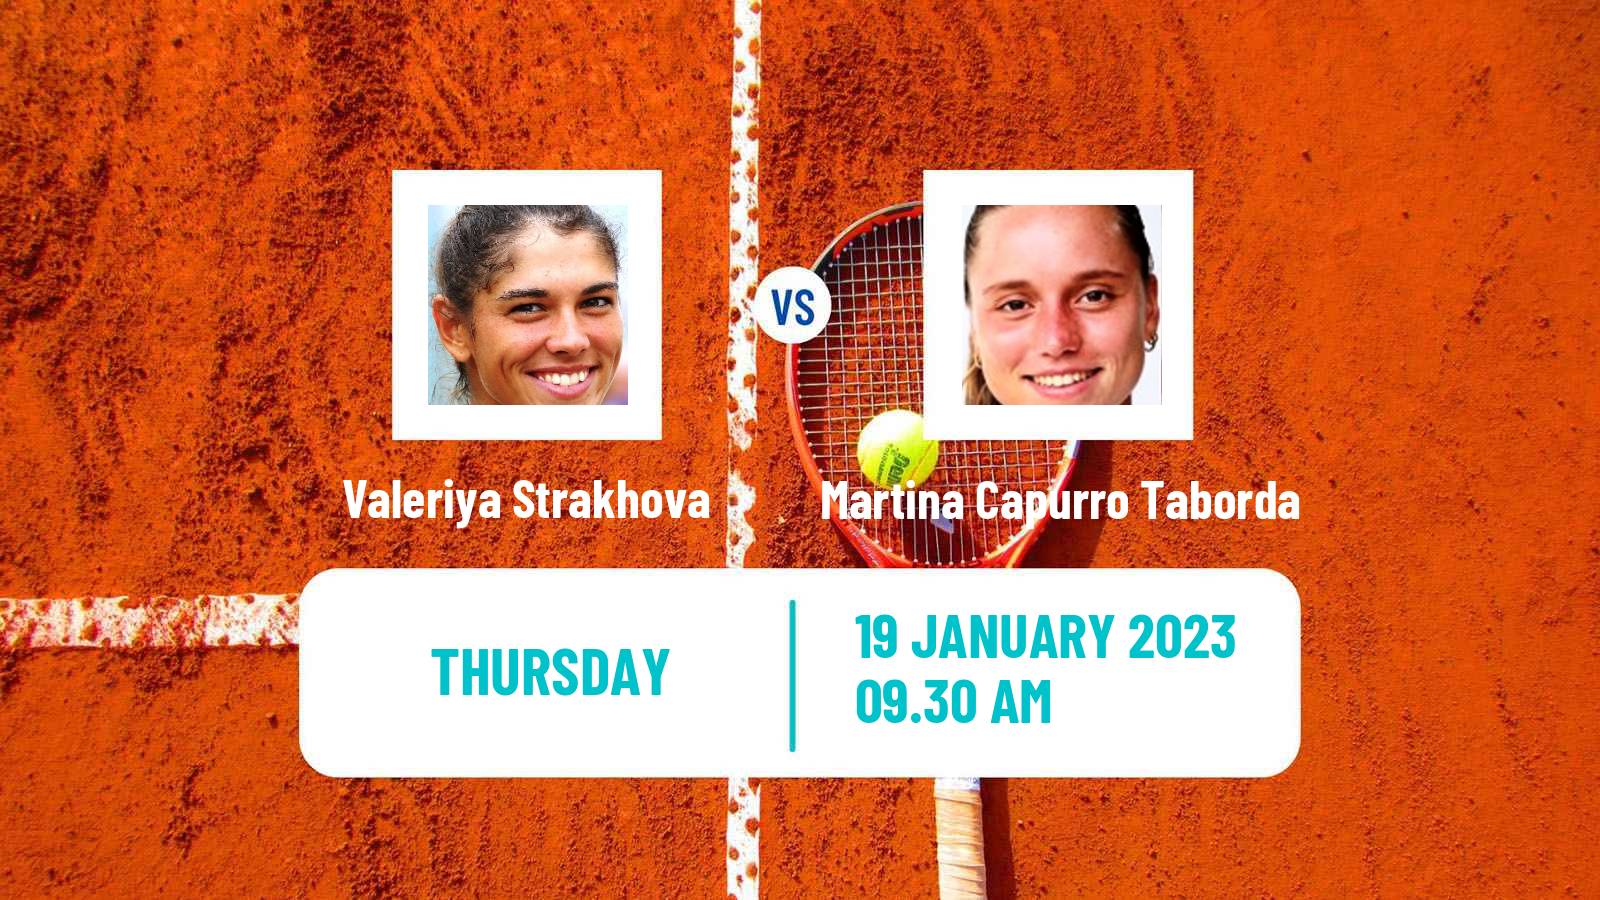 Tennis ITF Tournaments Valeriya Strakhova - Martina Capurro Taborda